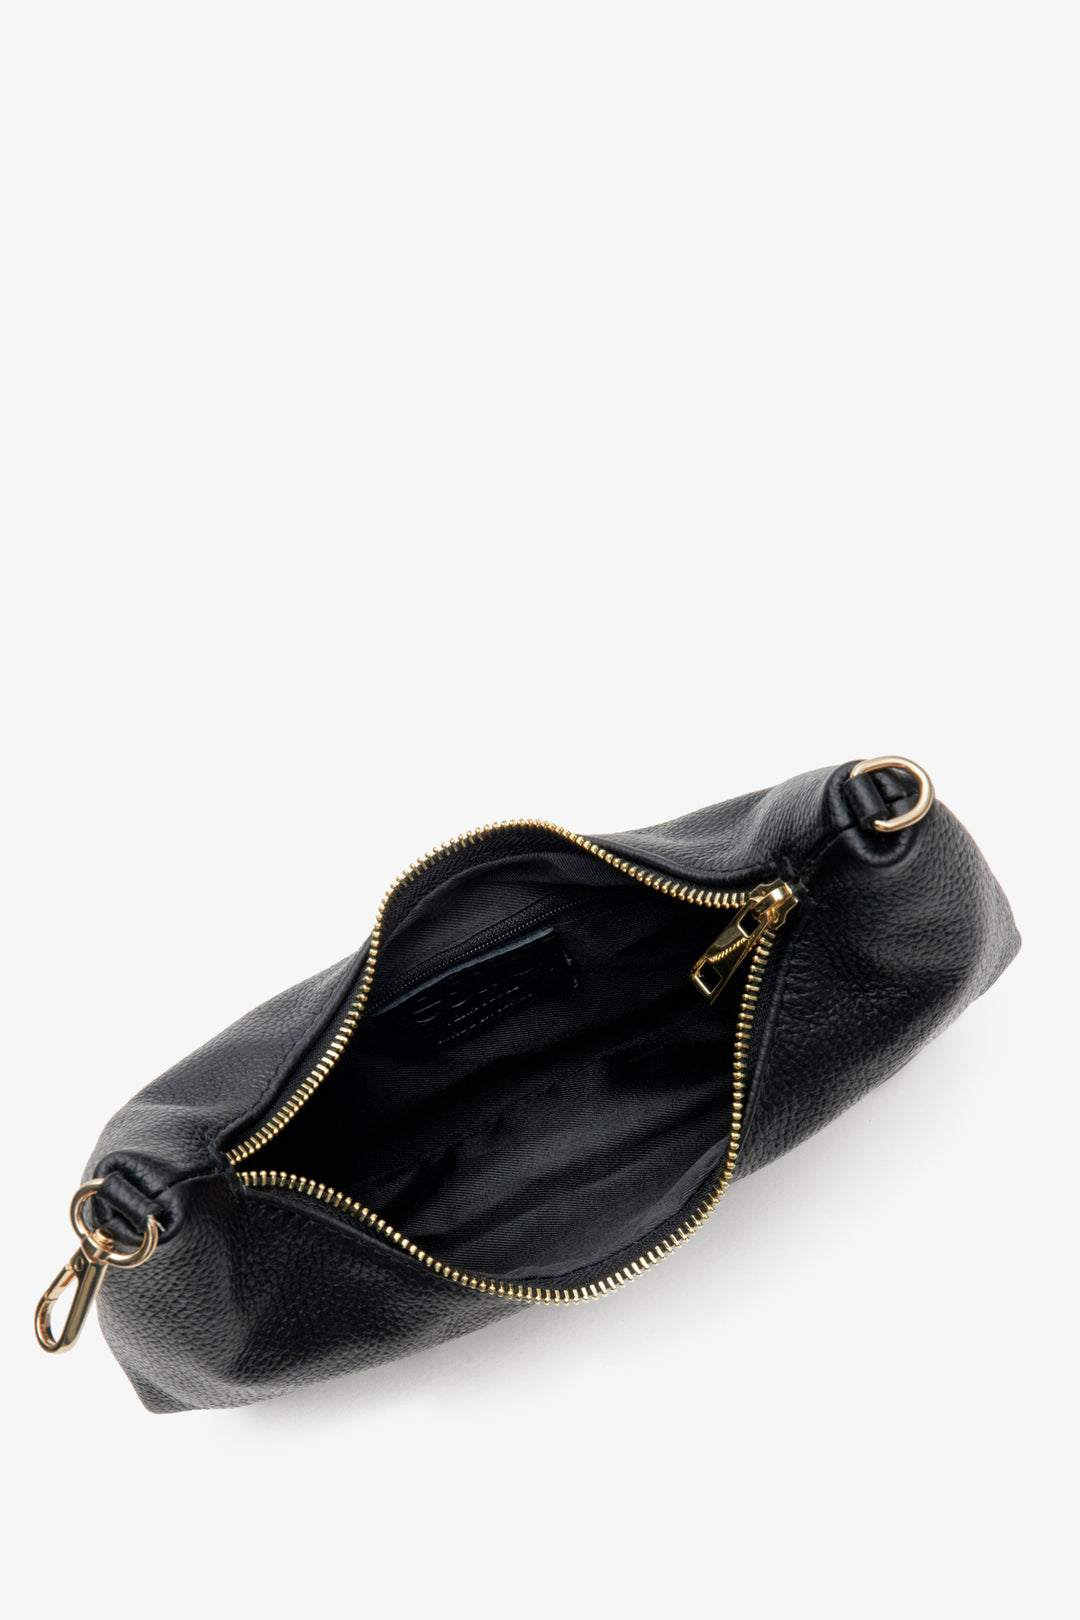 Women's small black handbag by Estro with a golden chain.